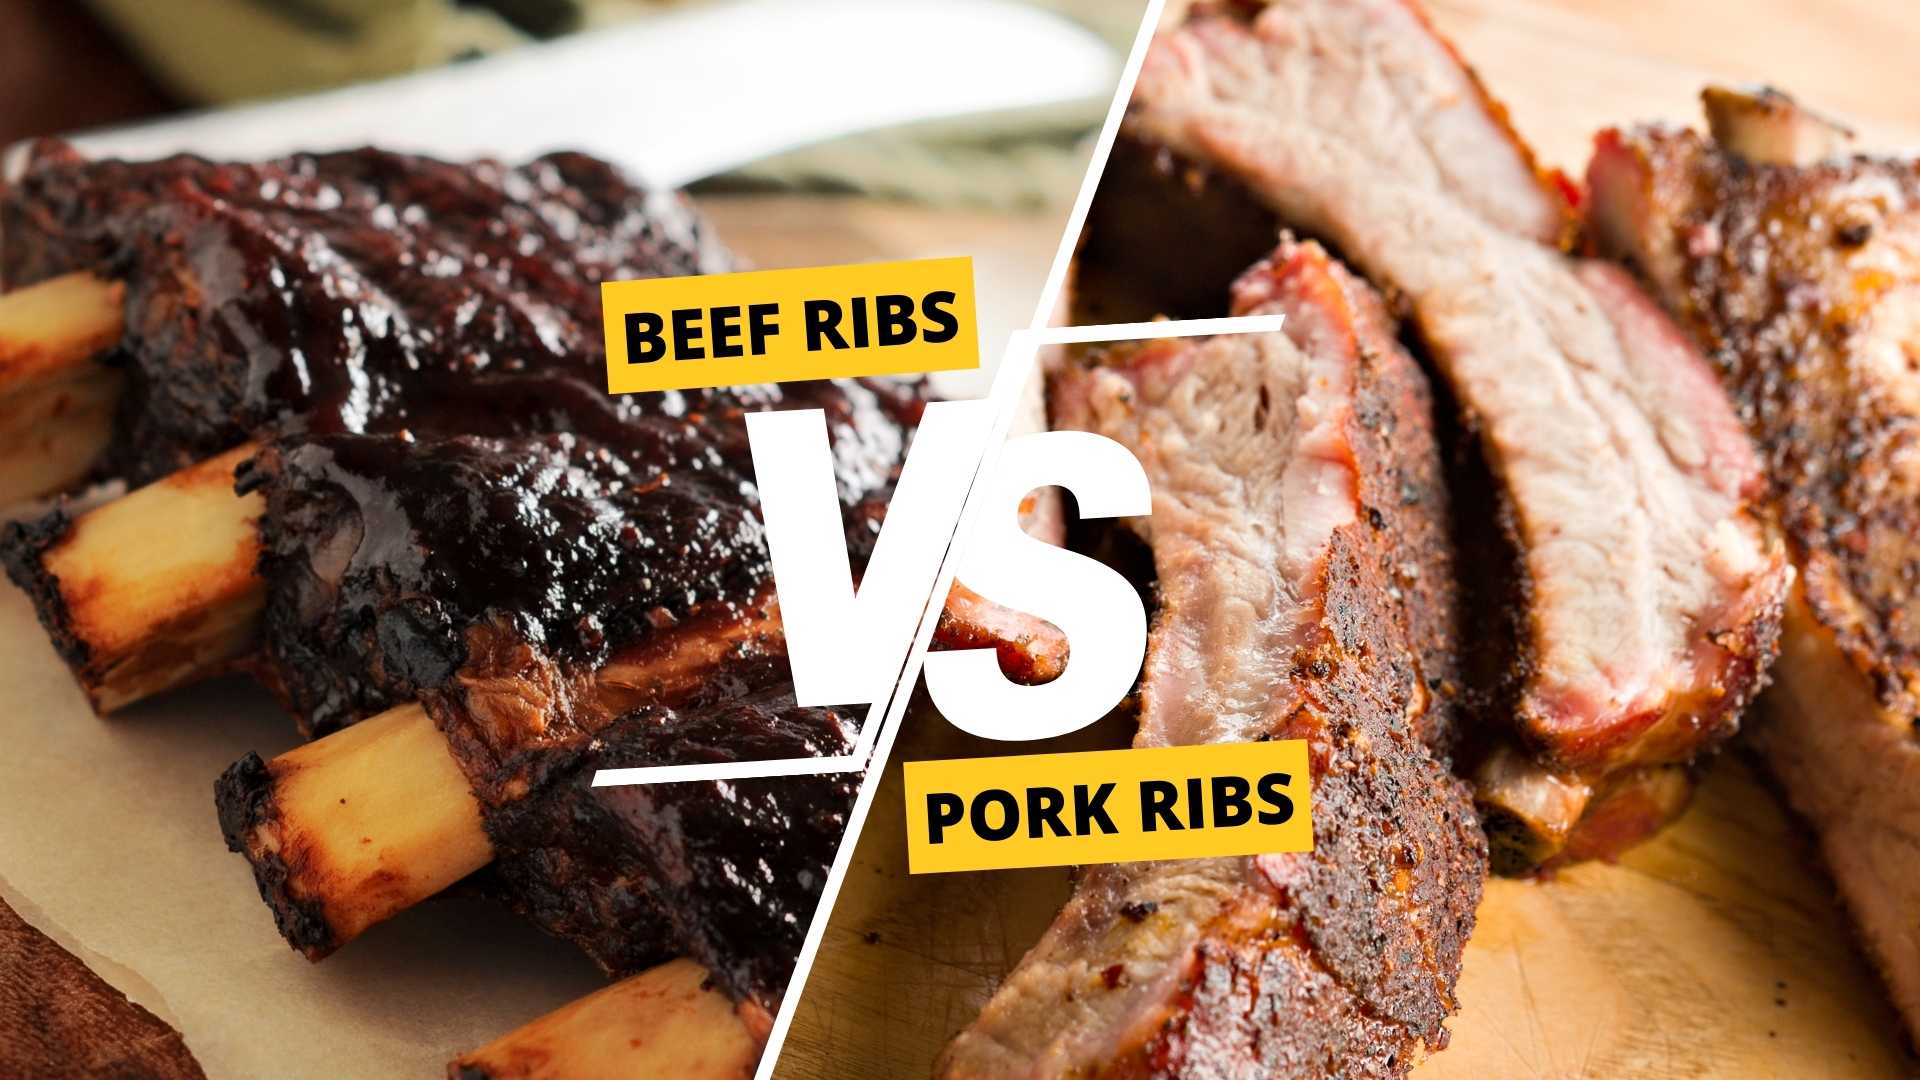 Beef Ribs vs Pork Ribs